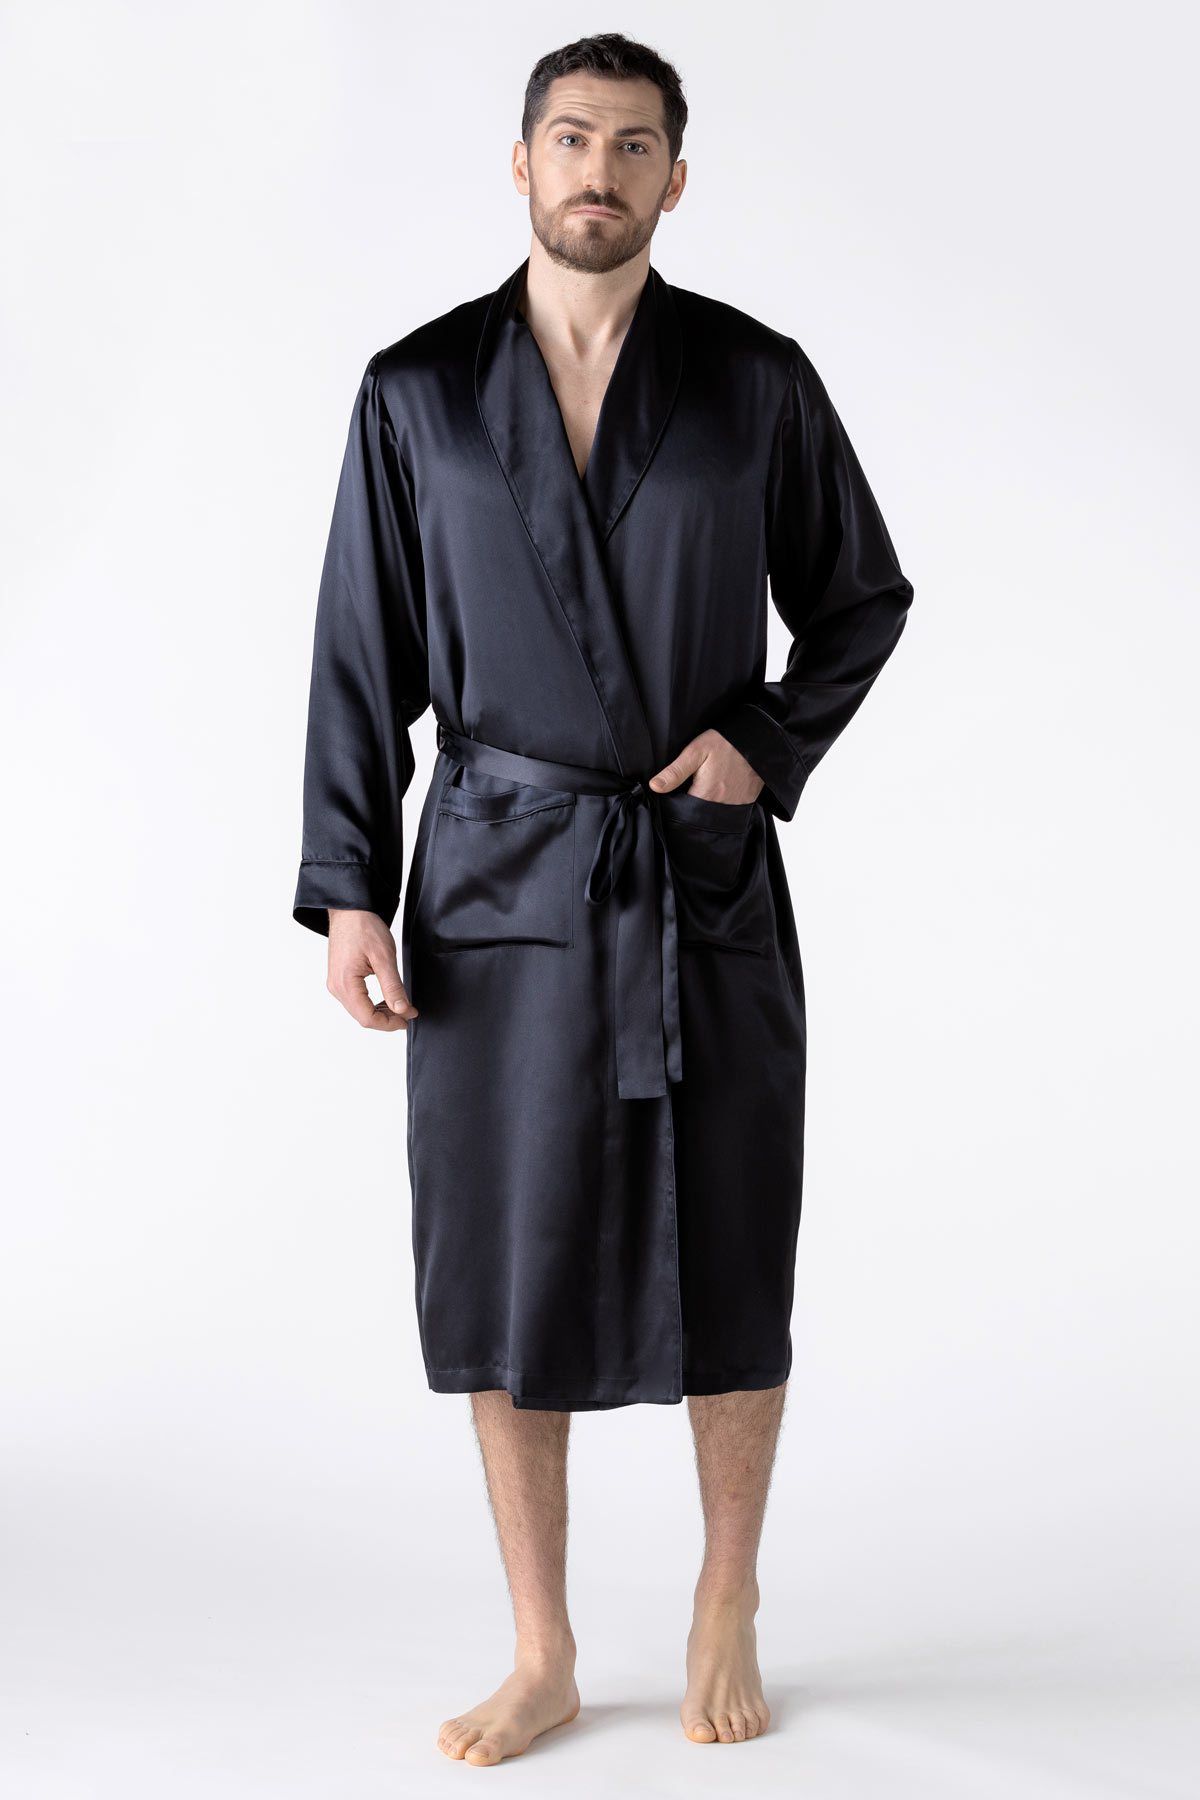 Buy Haseil Men's Satin Kimono Robe Spring Summer Shawl Collar Sleepwear  Classic Silk Bathrobes, Black,TagsizeXL=USsizeS/M Online at Low Prices in  India - Amazon.in